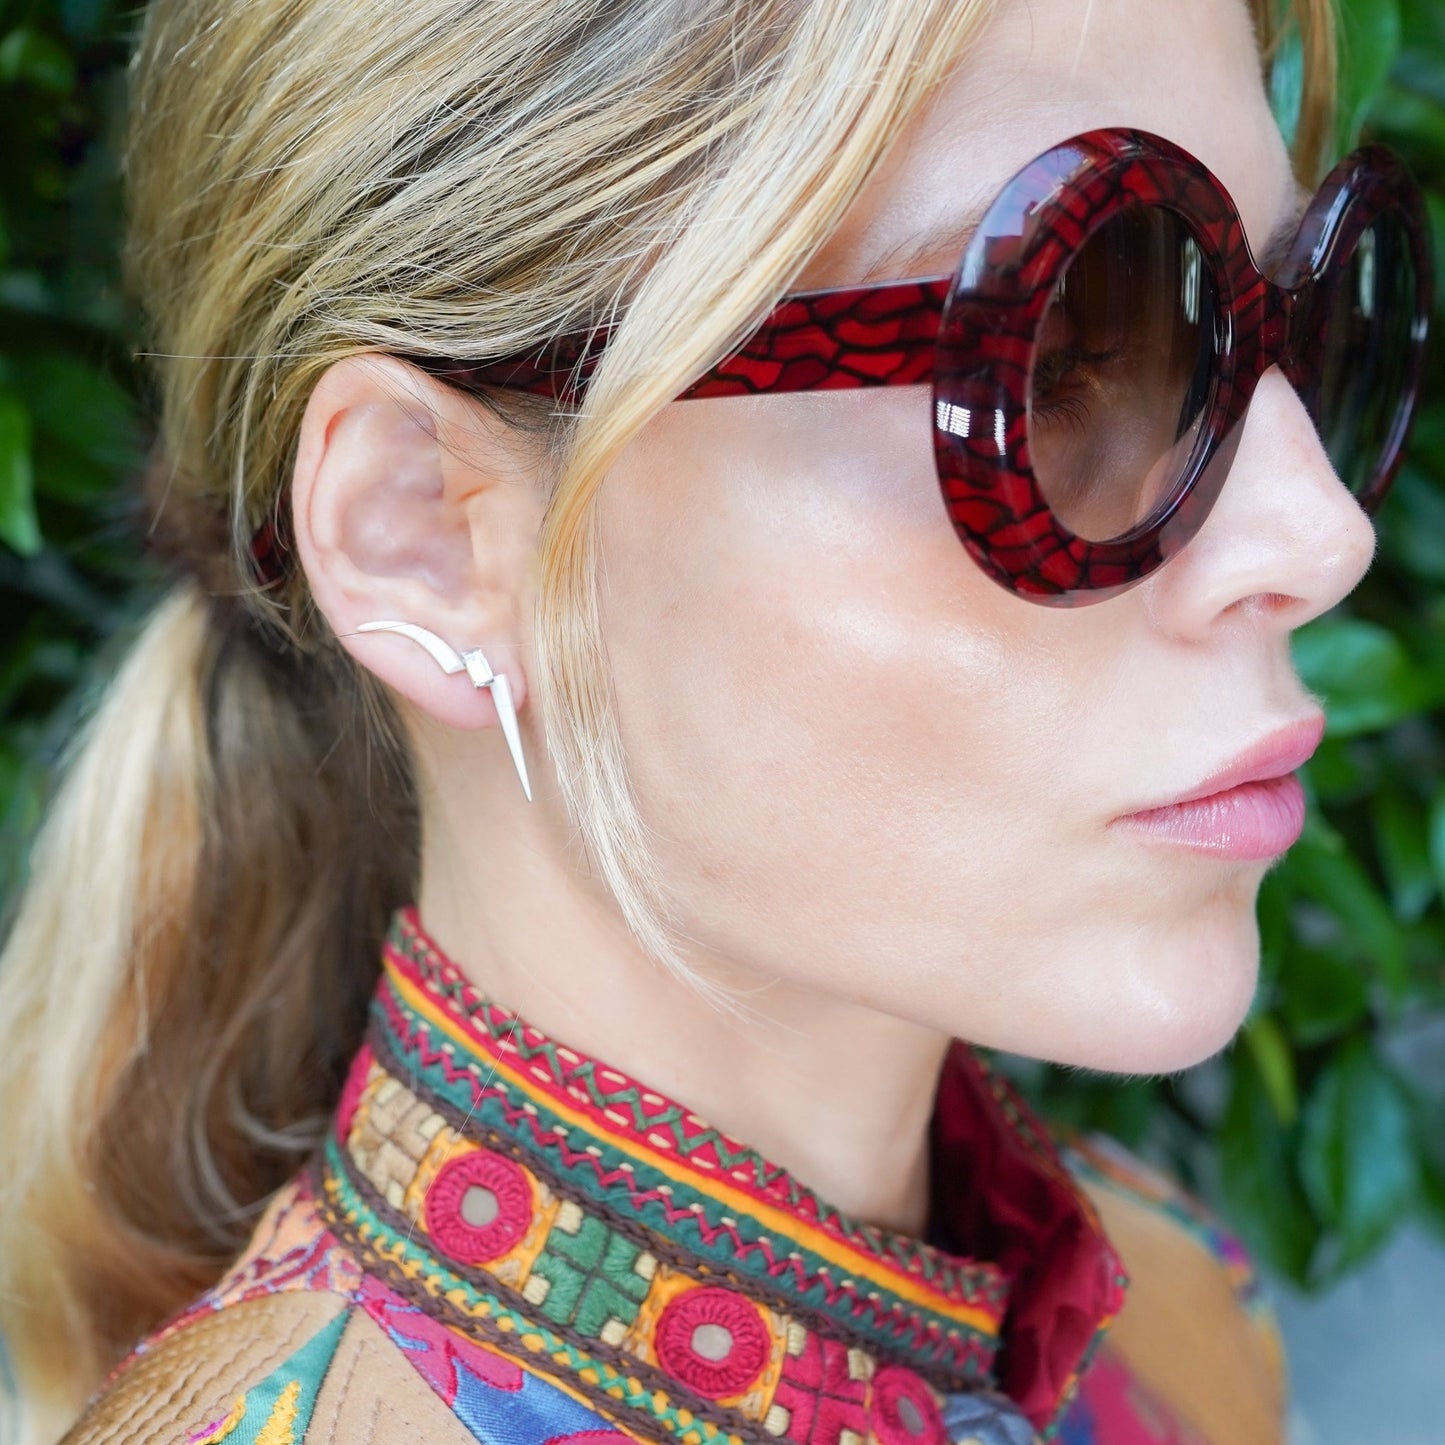 White Taura earrings with diamonds - Ines Nieto London